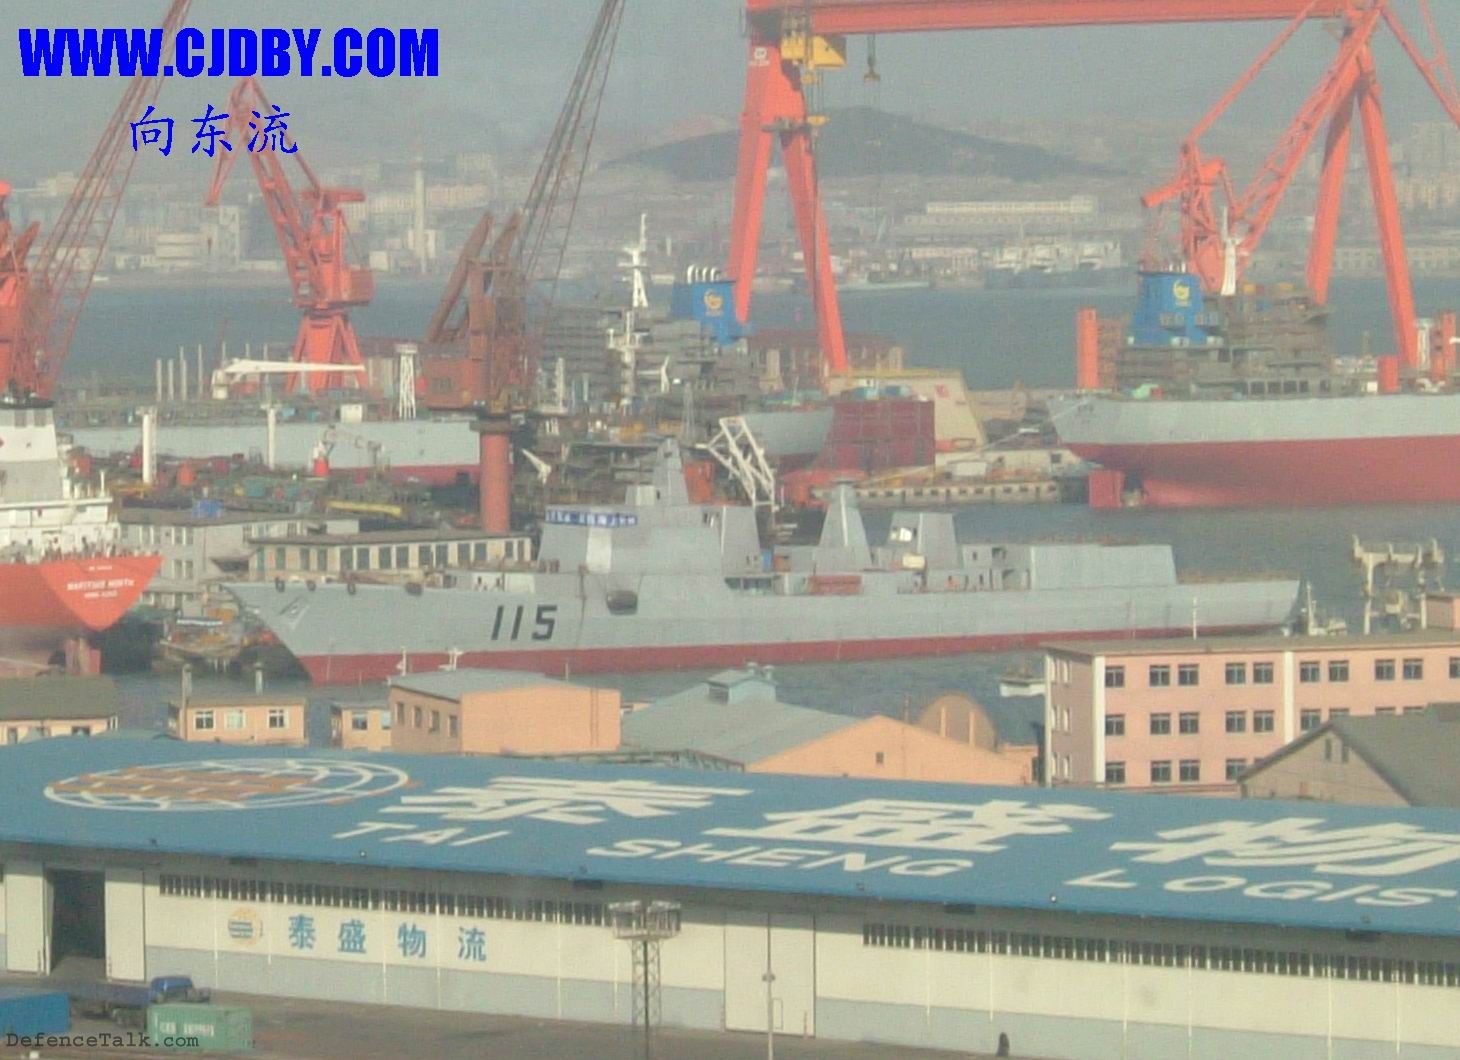 New hull similar to 051B Luhai class is under construction at Dalian shipya